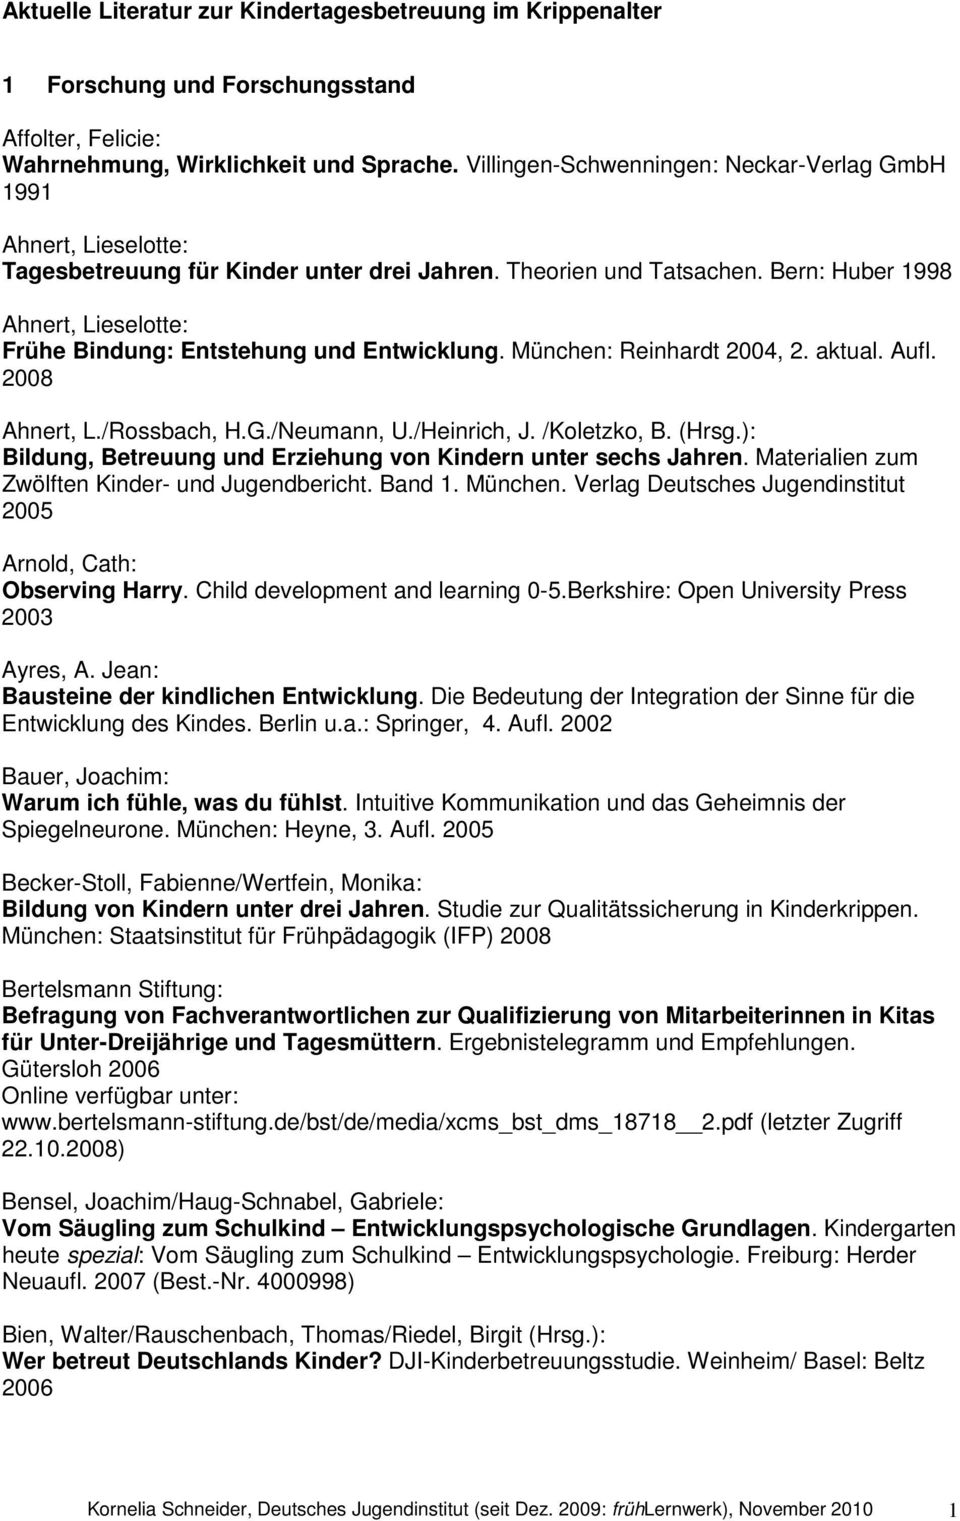 Bern: Huber 1998 Ahnert, Lieselotte: Frühe Bindung: Entstehung und Entwicklung. München: Reinhardt 2004, 2. aktual. Aufl. 2008 Ahnert, L./Rossbach, H.G./Neumann, U./Heinrich, J. /Koletzko, B. (Hrsg.